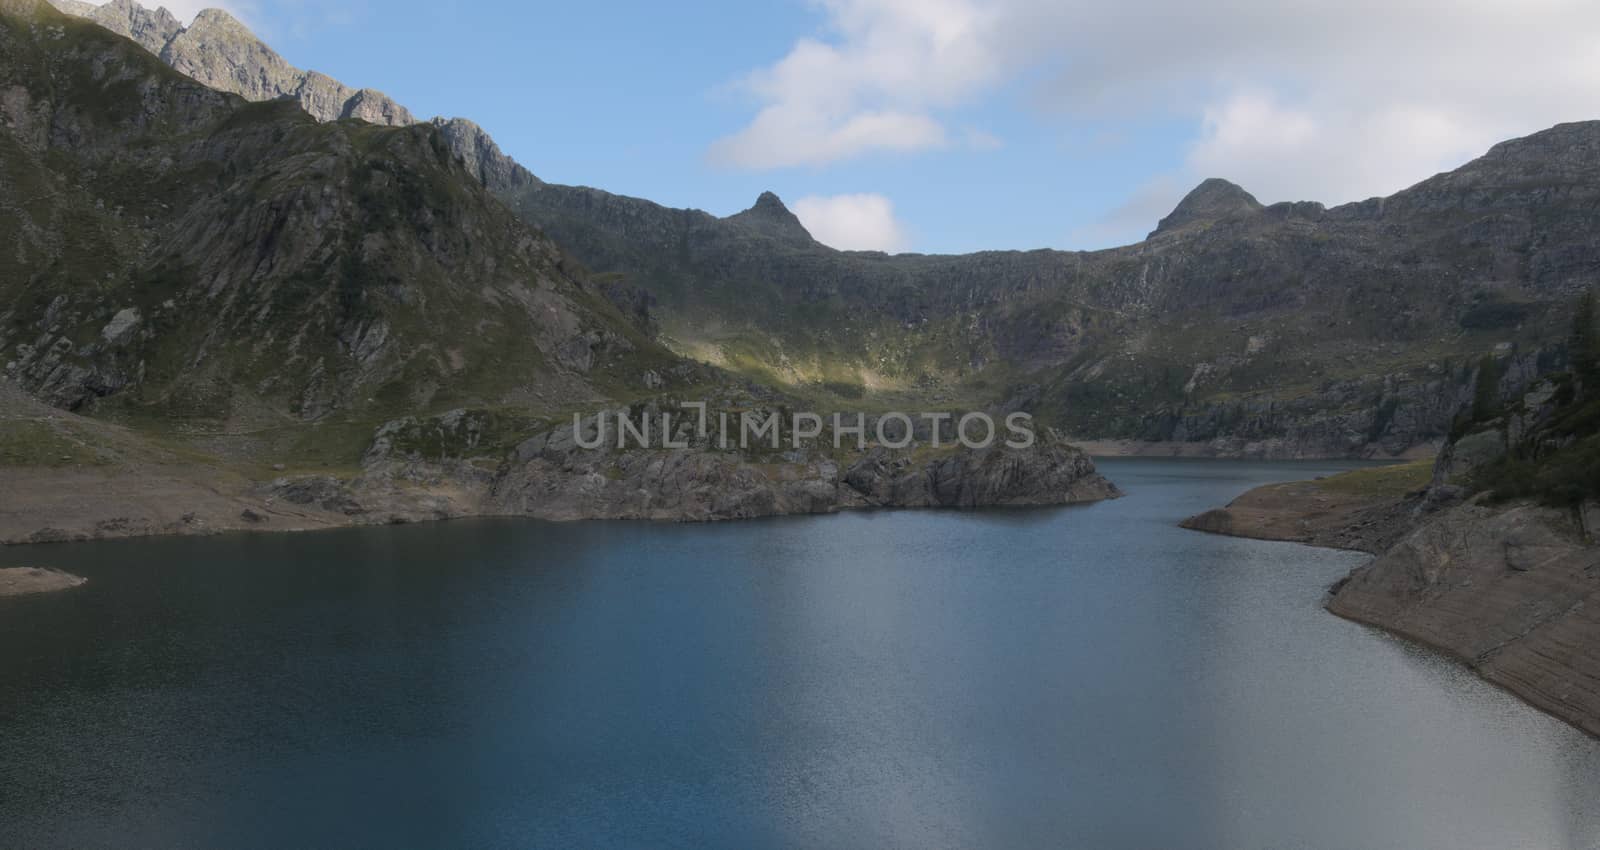 Lake Gemelli basin on the Bergamo Alps, northern Italy
